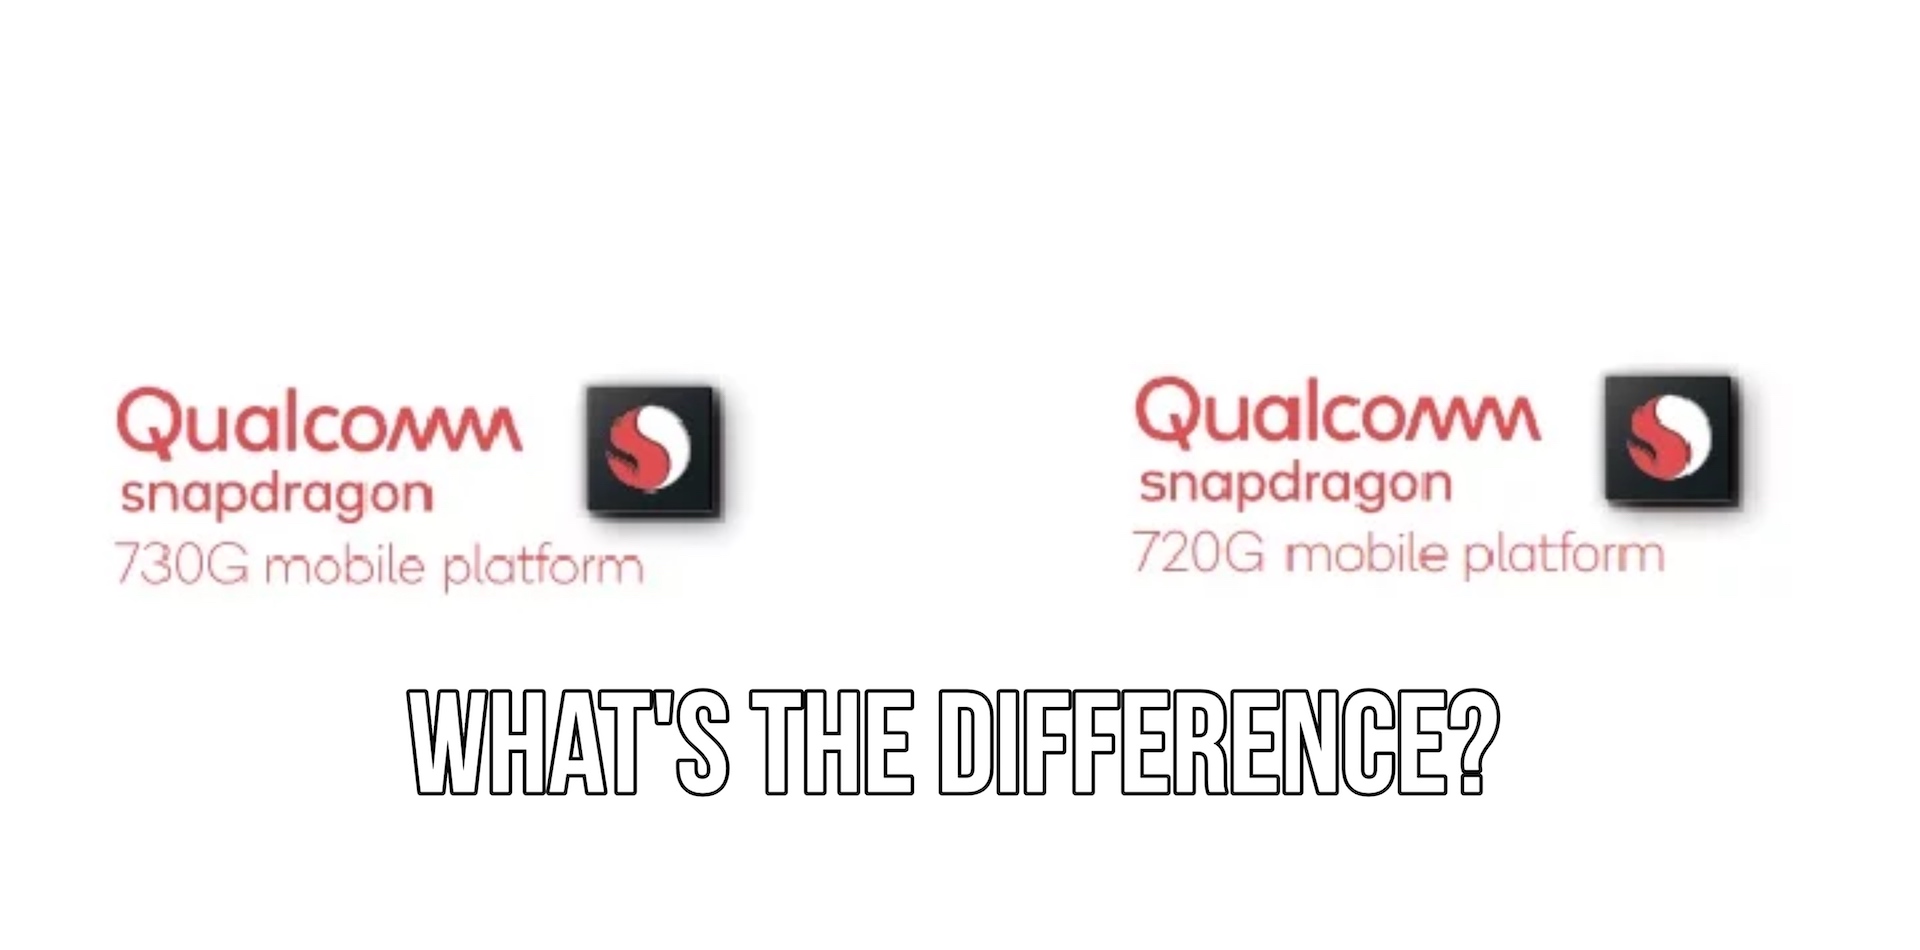 Snapdragon 730G vs 720G